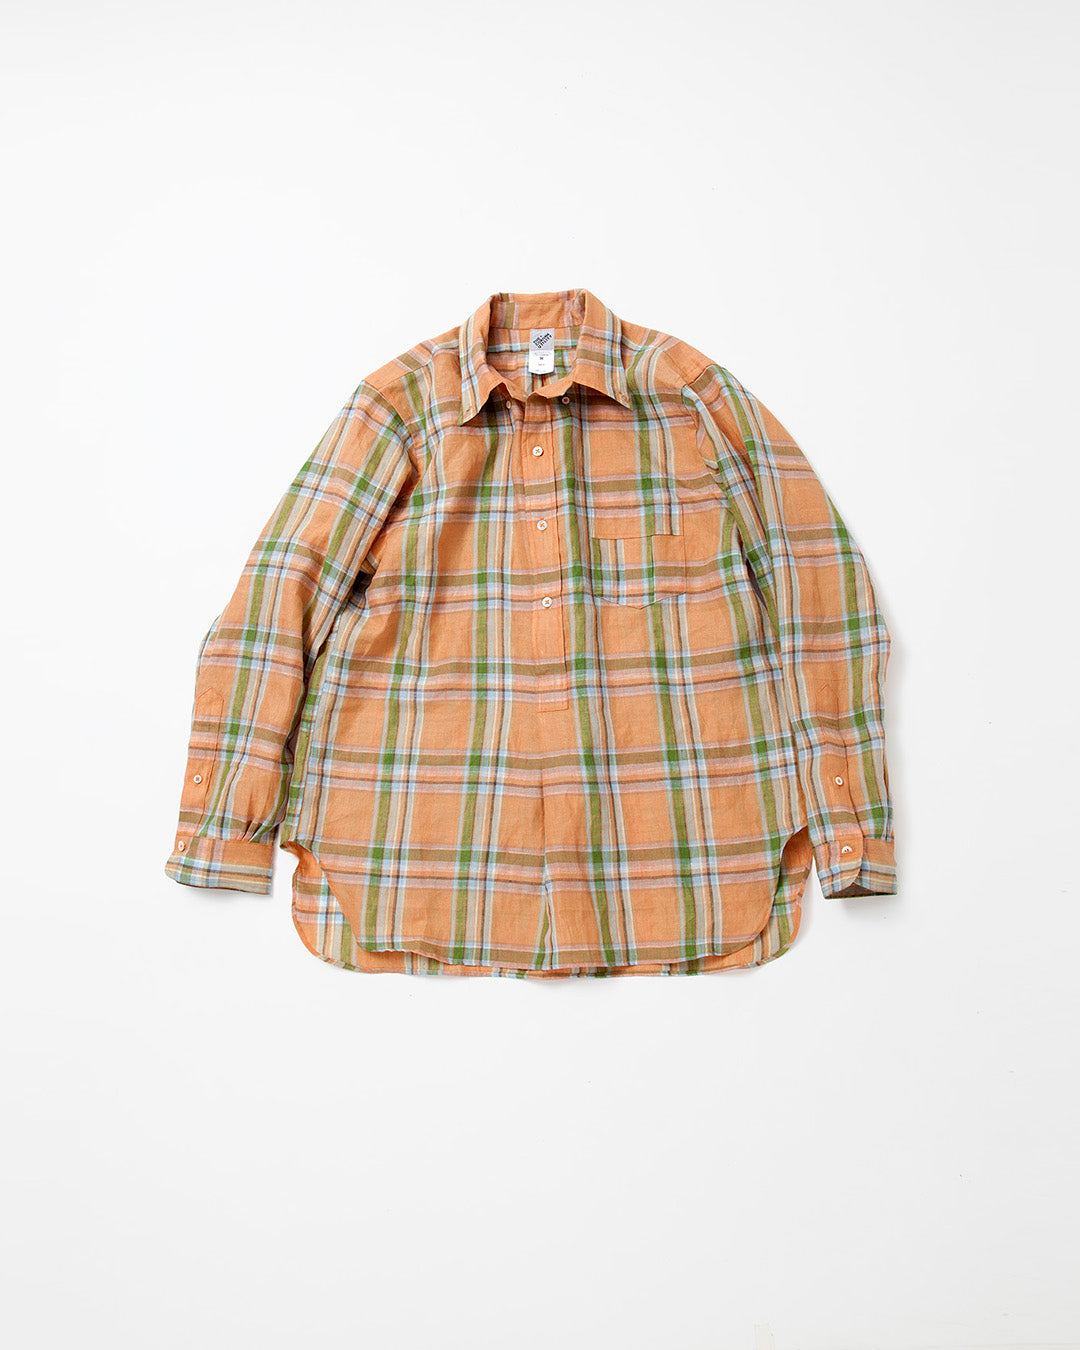 THE CORONA UTILITY・White Collar Pullover Work Shirt / Orange × Green